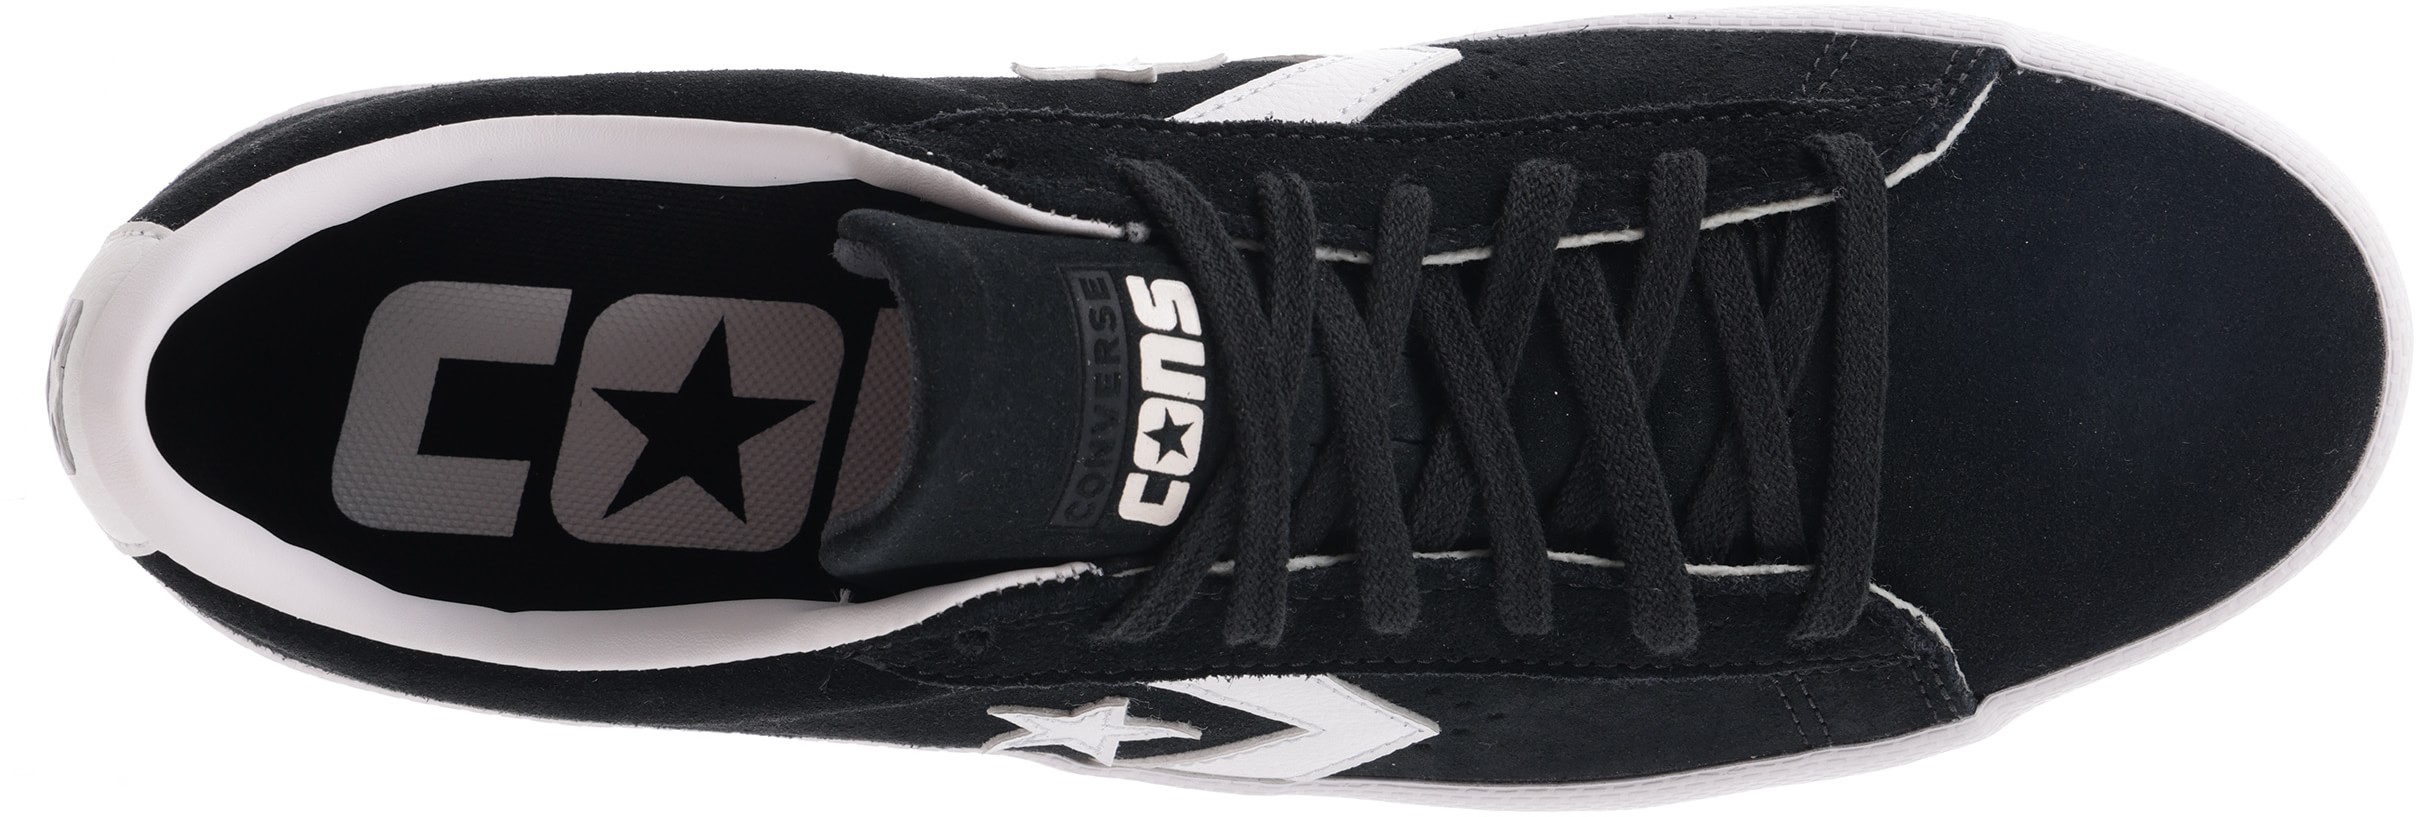 Converse Pro Leather Vulcanized Pro Skate Shoes - black/white/white ...